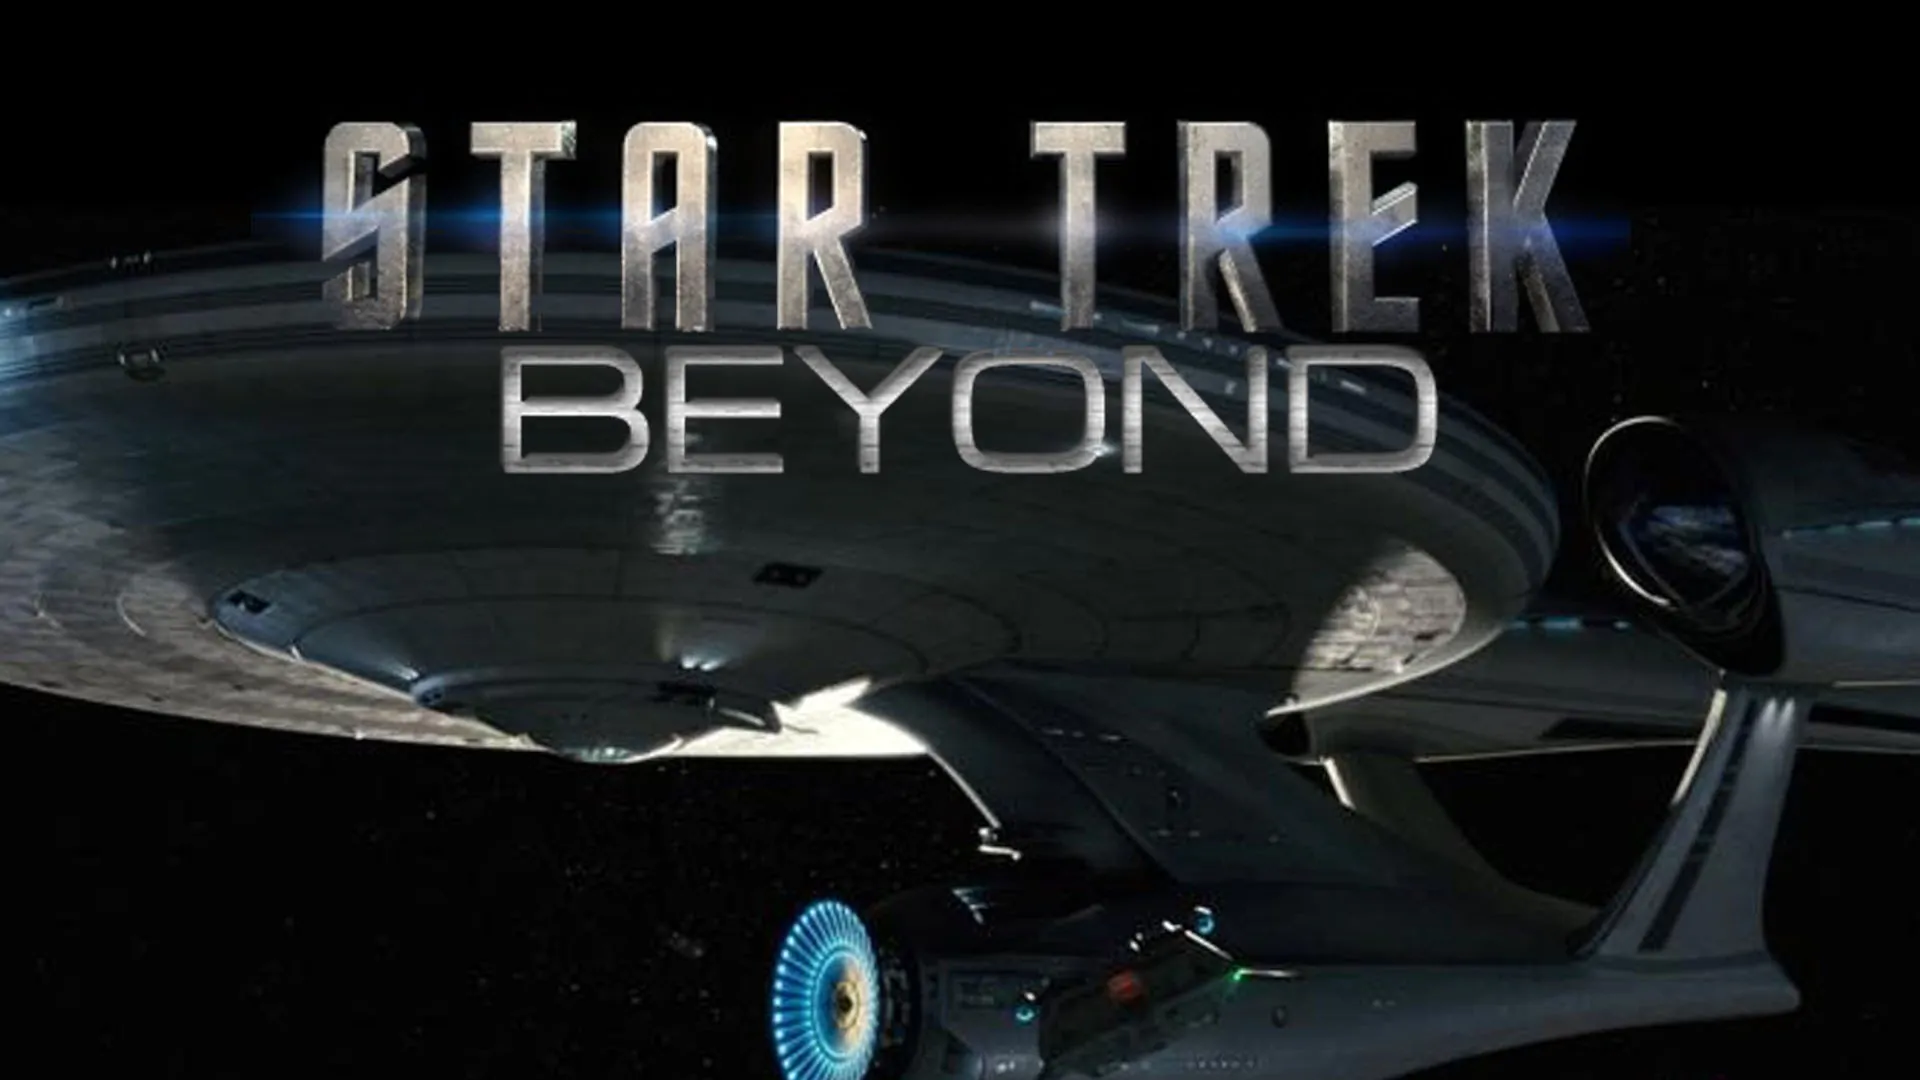 Streaming, trama e personaggi Star Trek Beyond